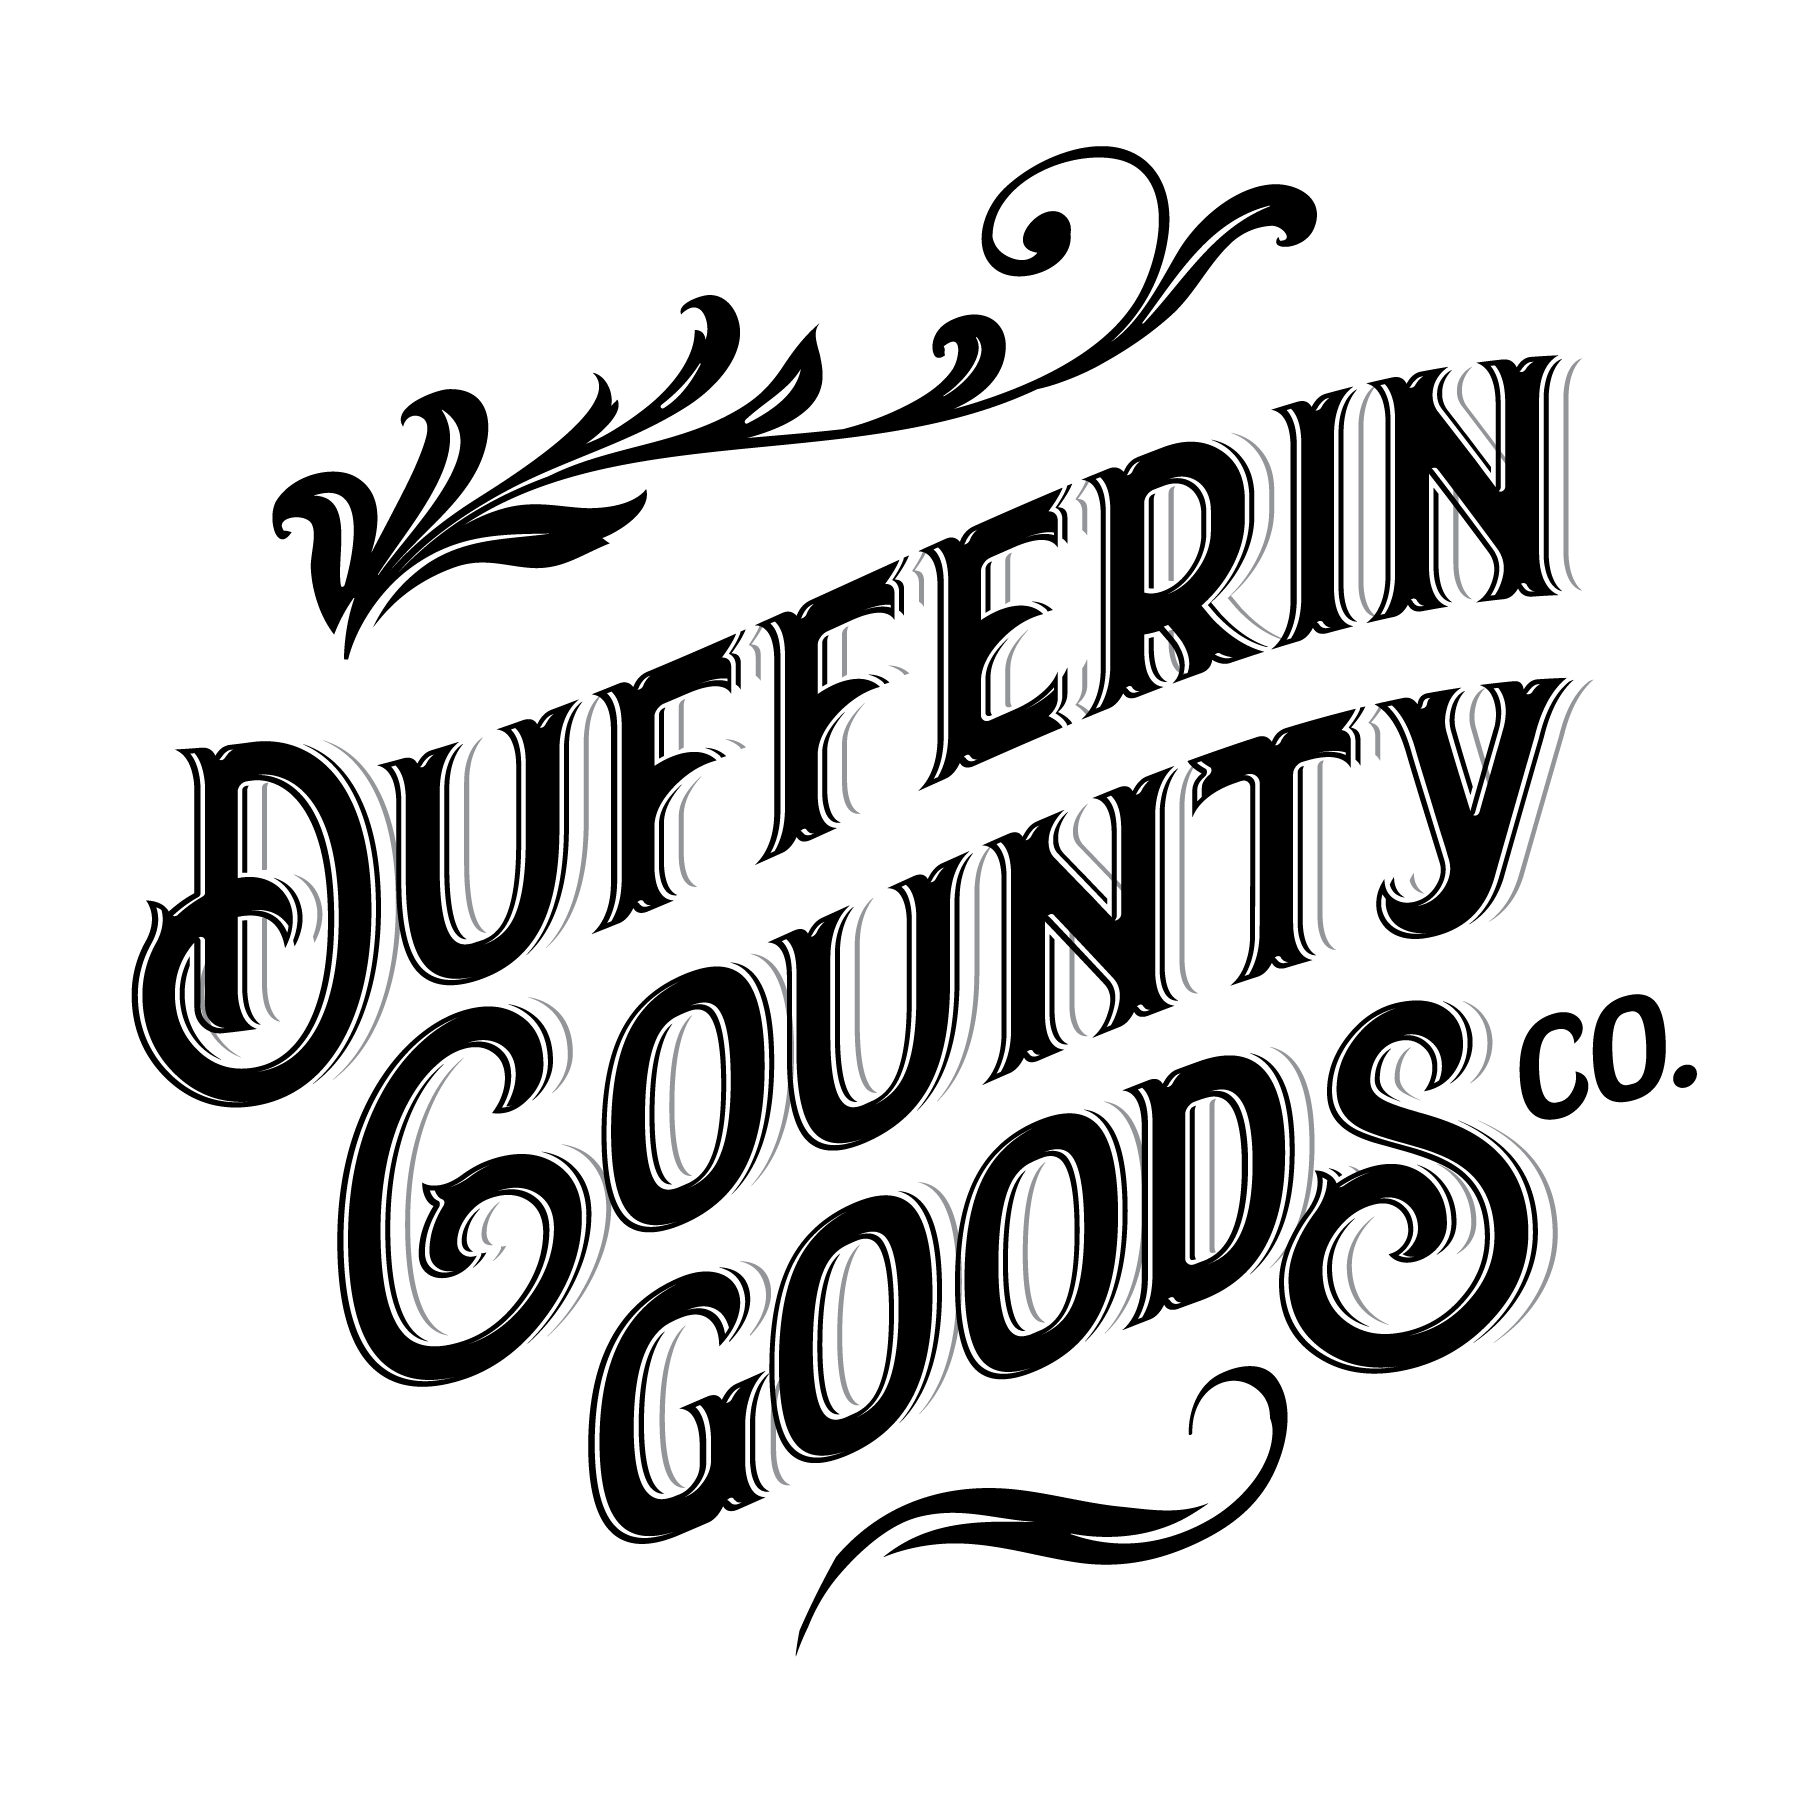 Dufferin County Goods Co.